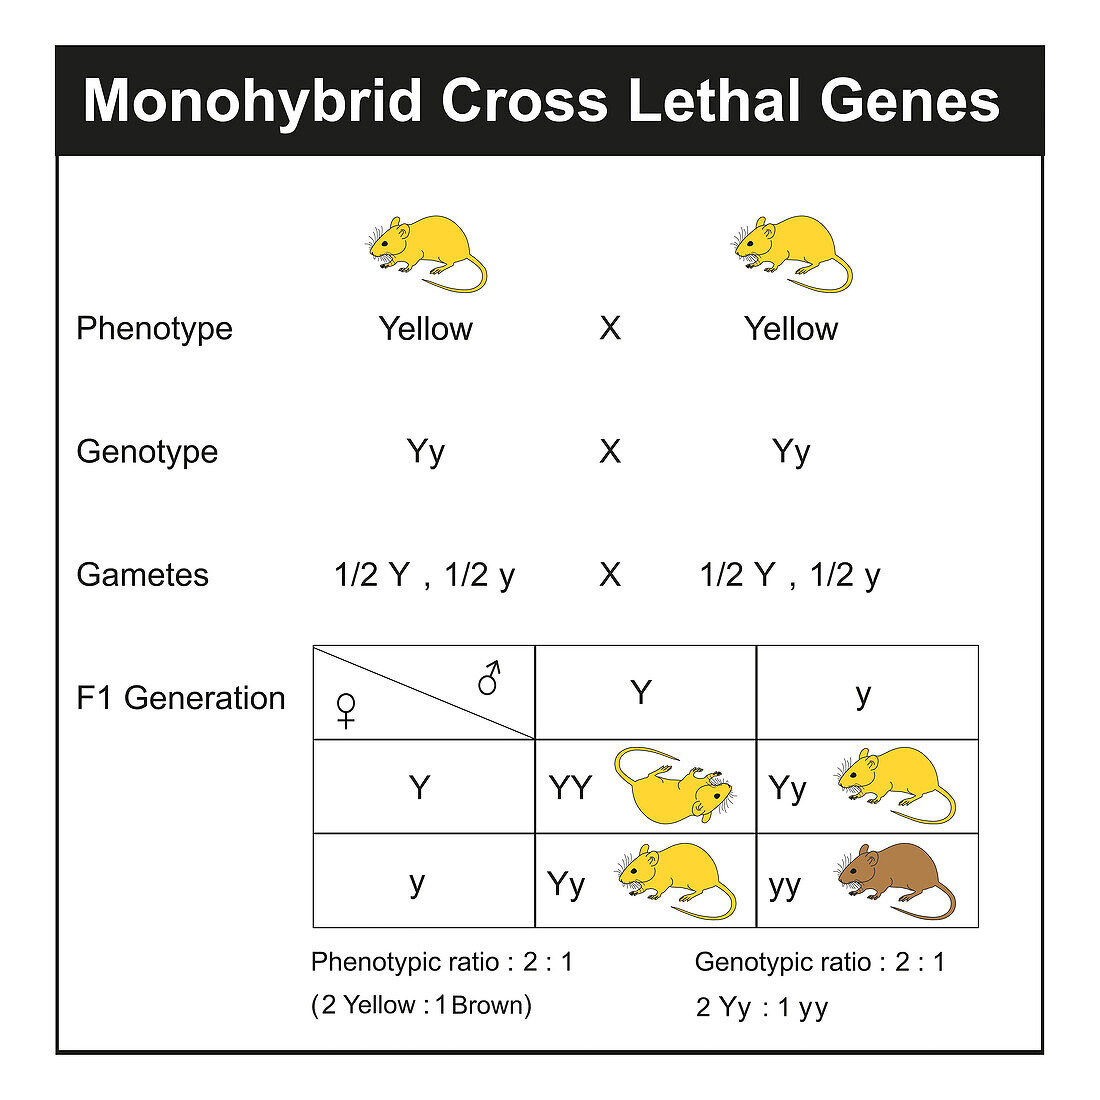 Monohybrid cross lethal gene, illustration